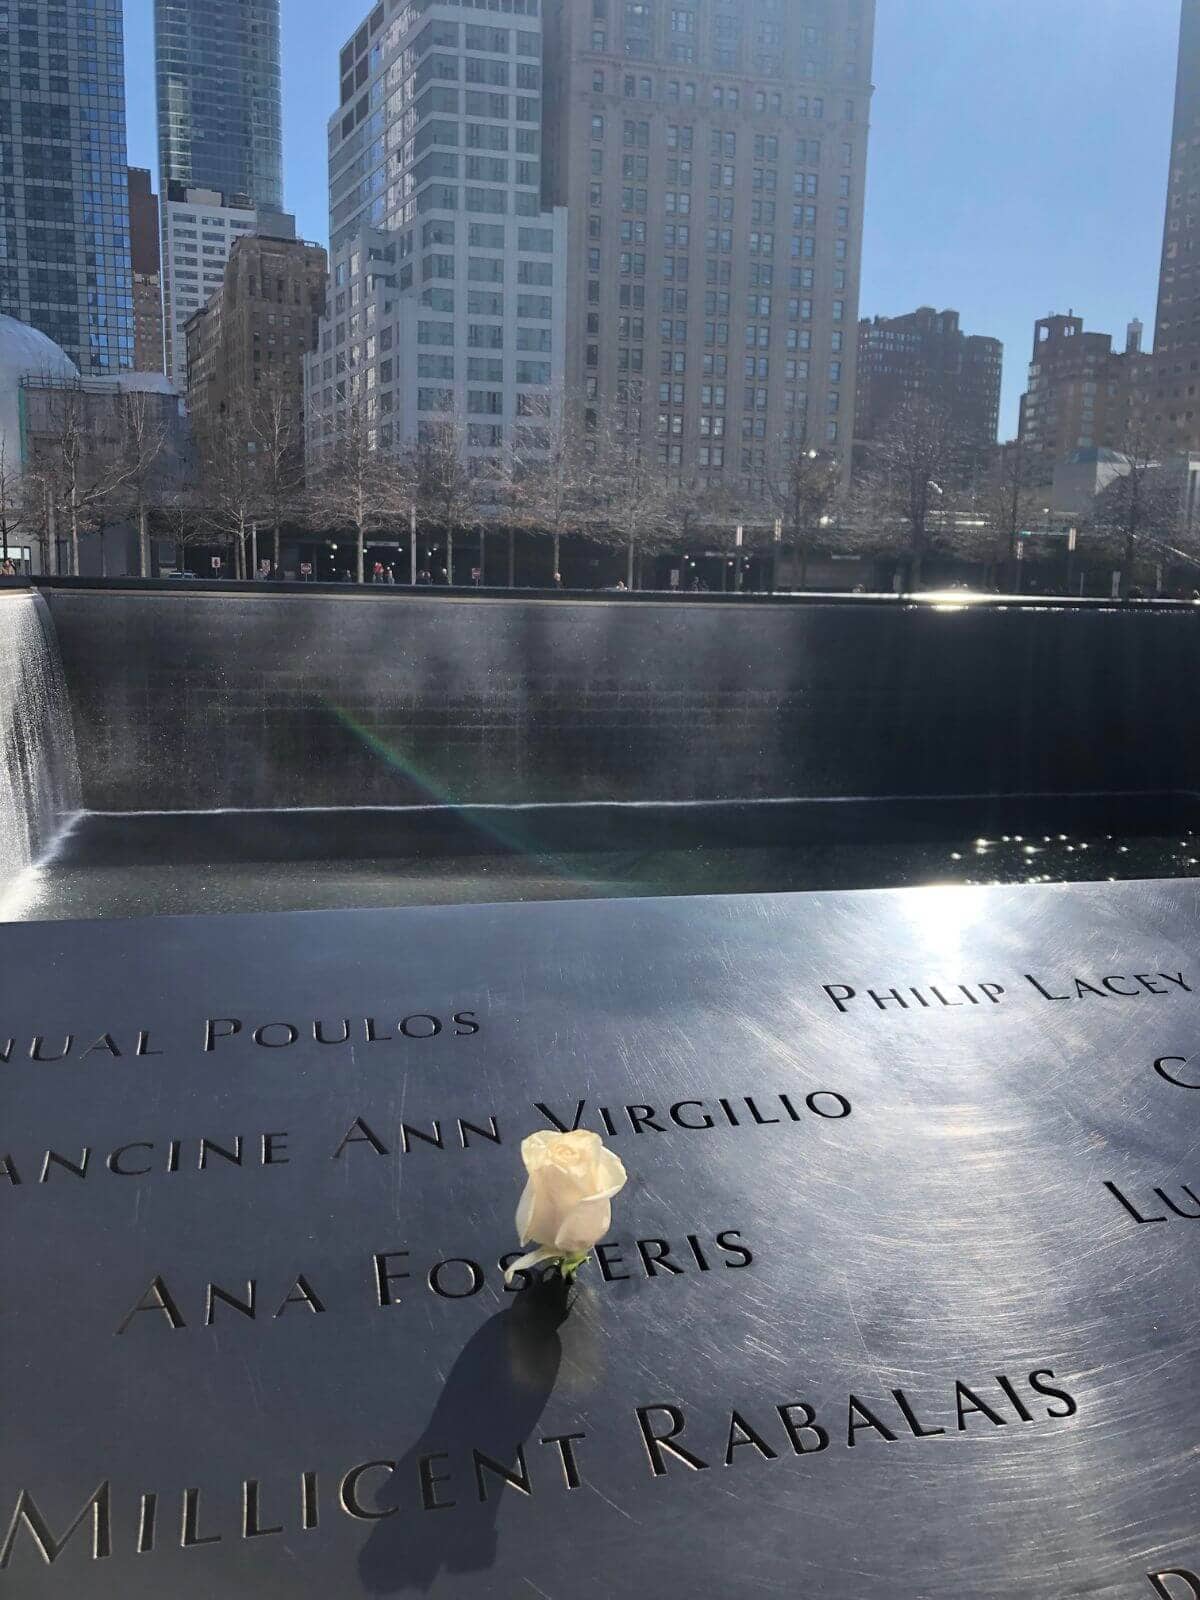 White rose on memorial 911 Reflection Pool.